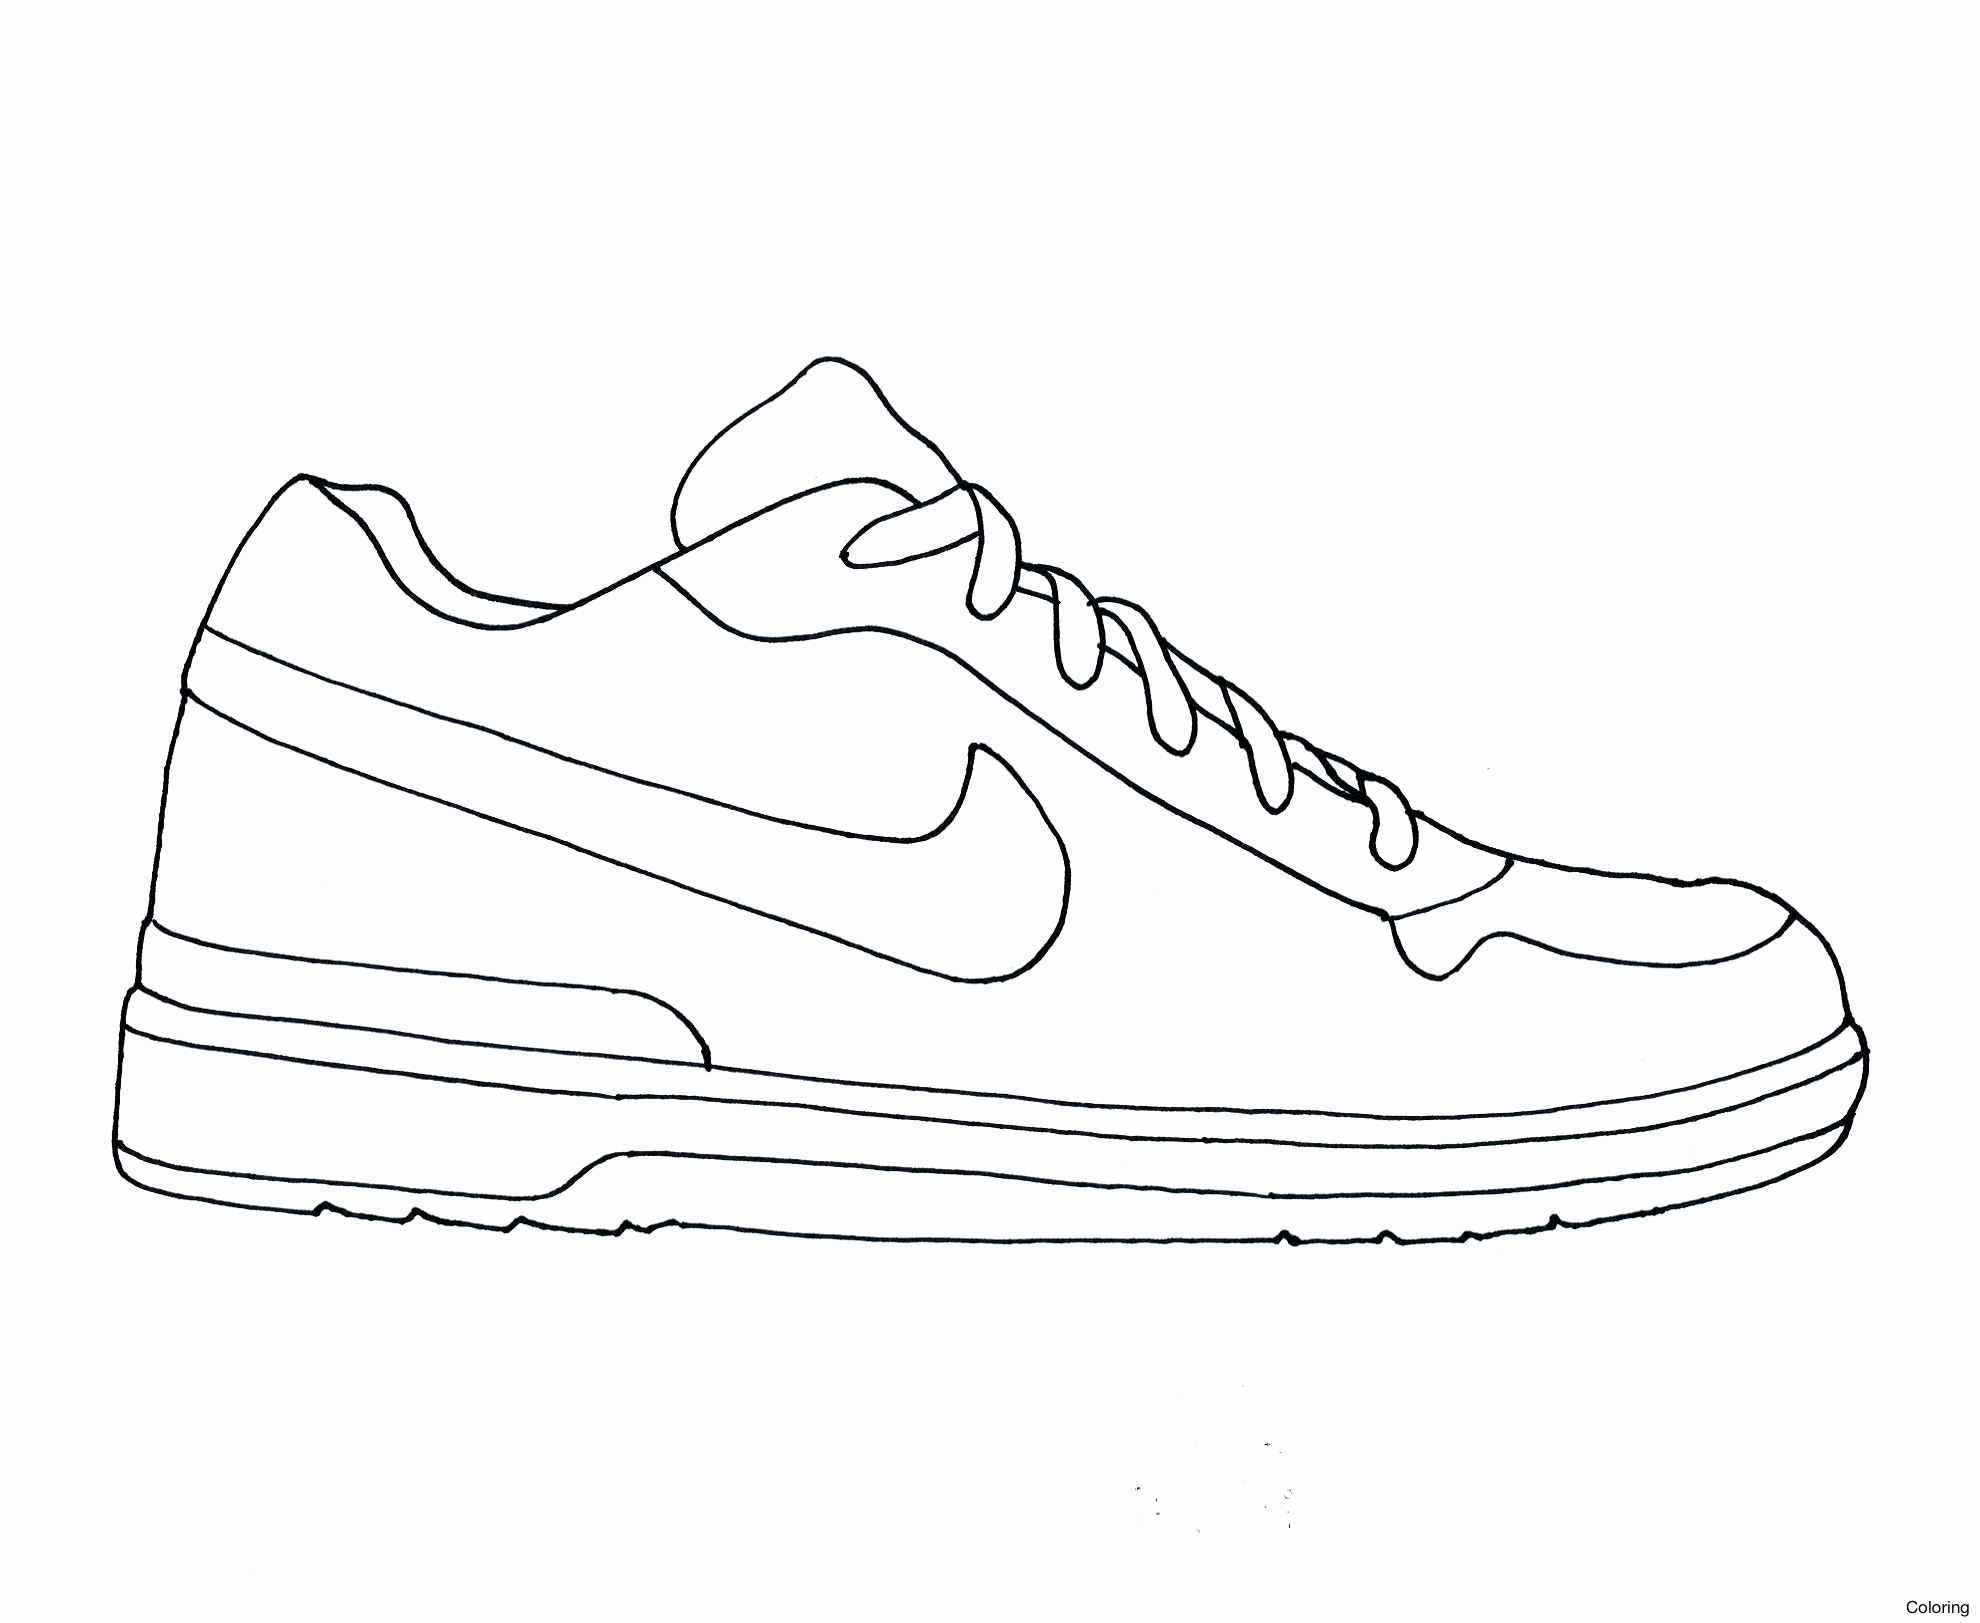 Tennis Shoe Coloring Page at Free printable